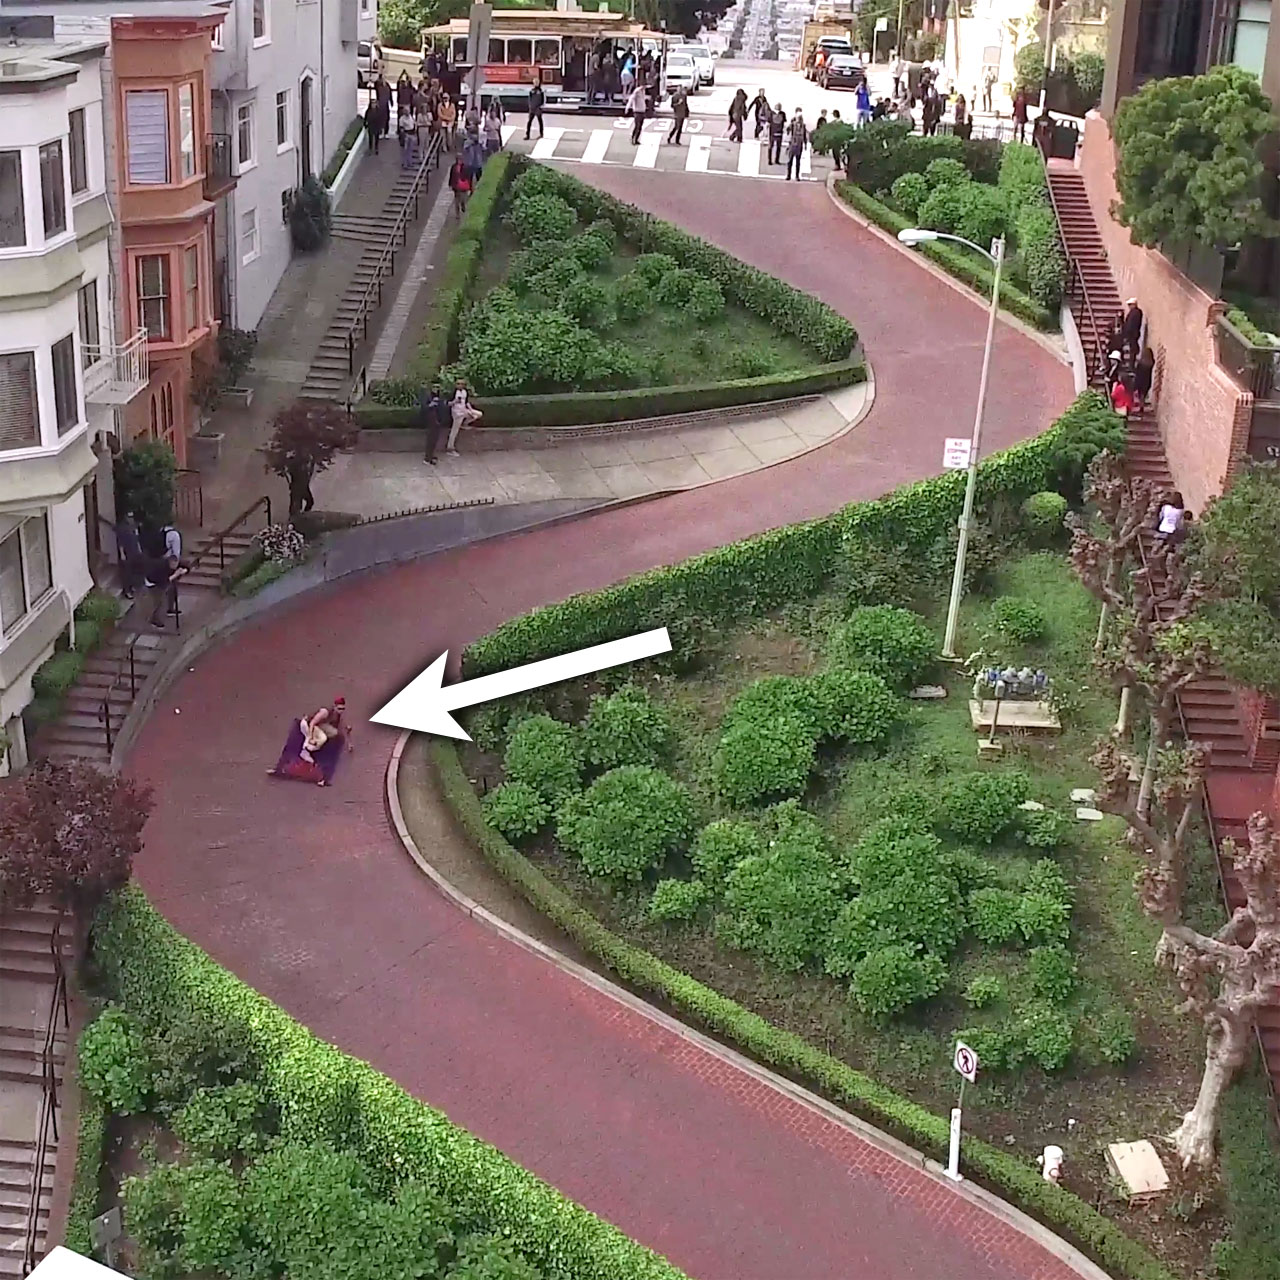 Jesse Wellens pulls Aladdin skateboard prank in San Francisco